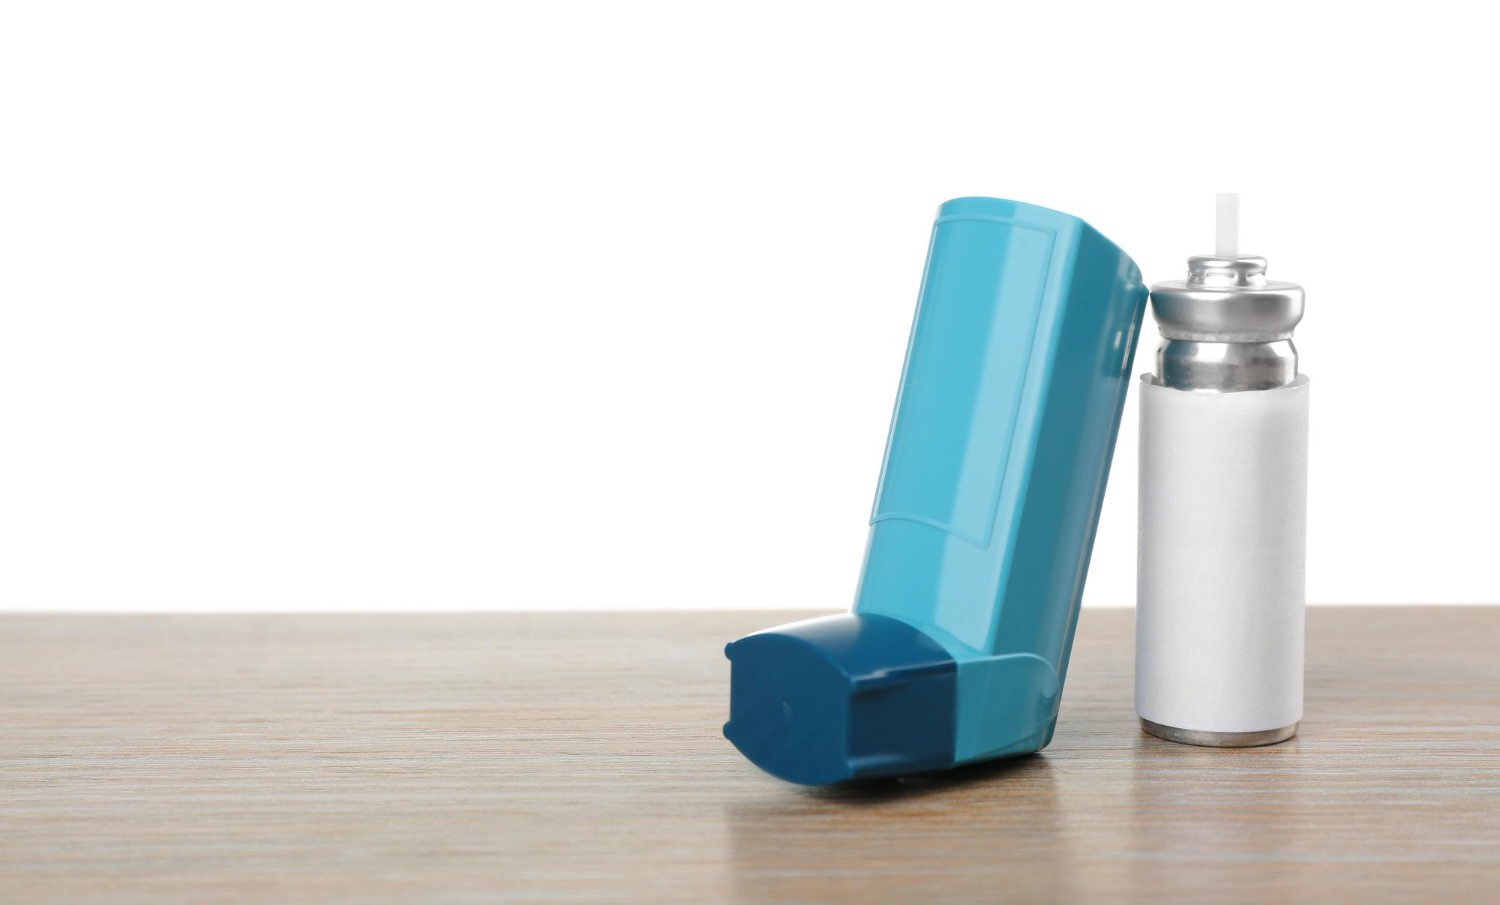 asthma inhaler wooden table